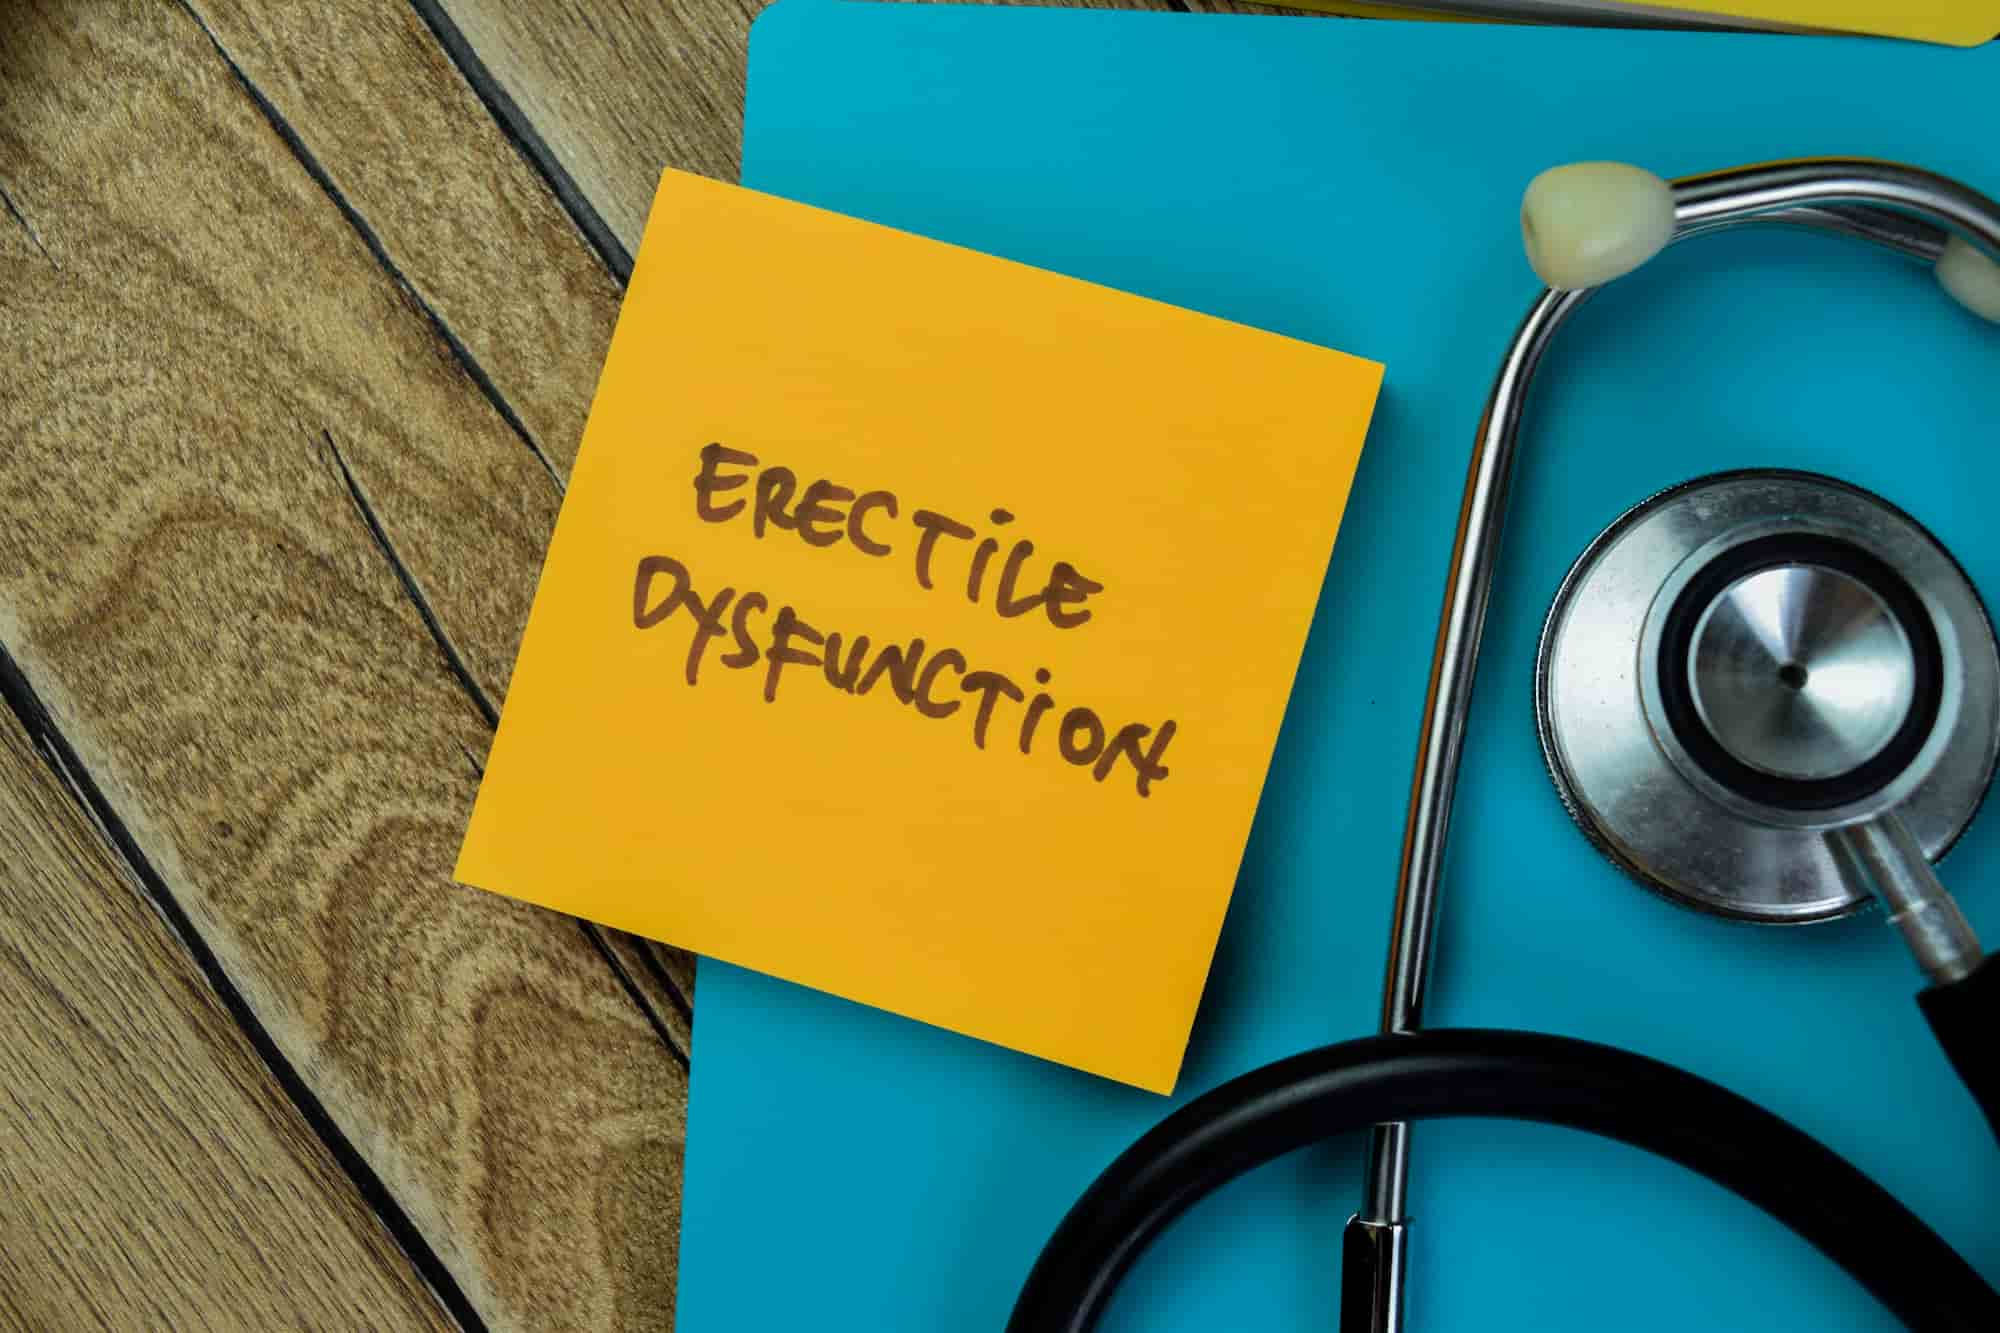 Turkiye erectile dysfunction treatment procedure